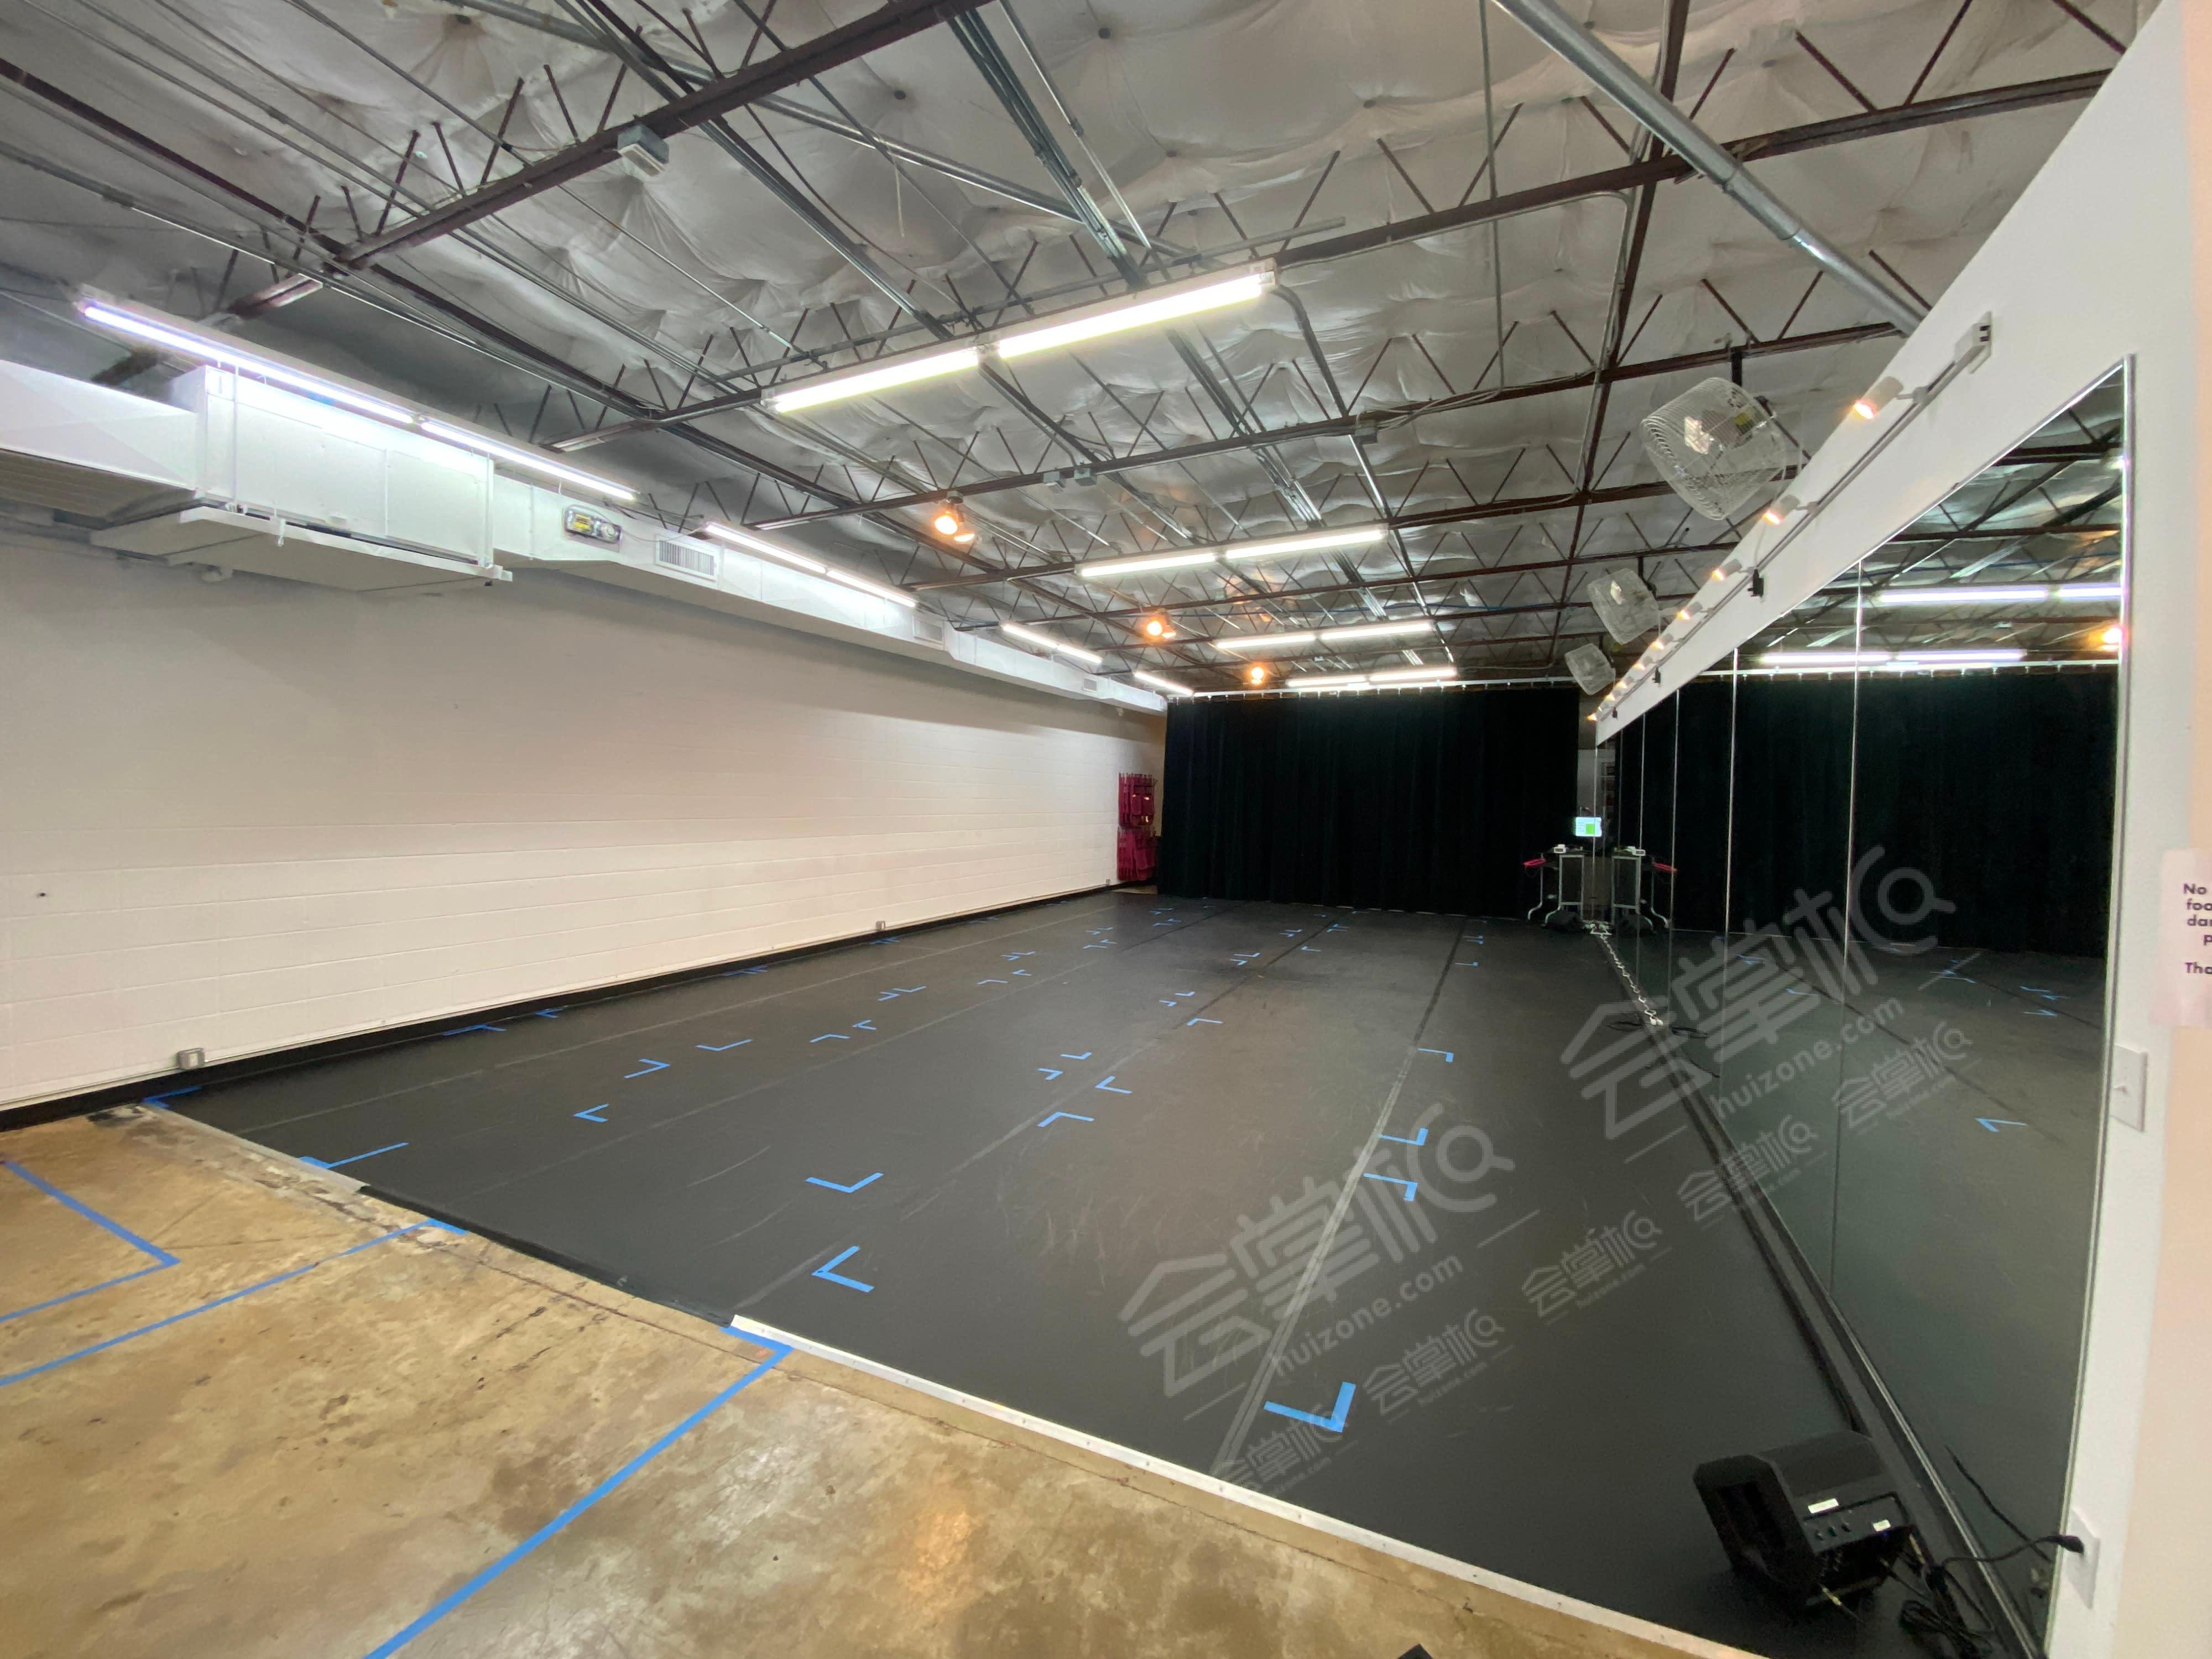 Yoga/dance studio space in centrally located Mueller area!